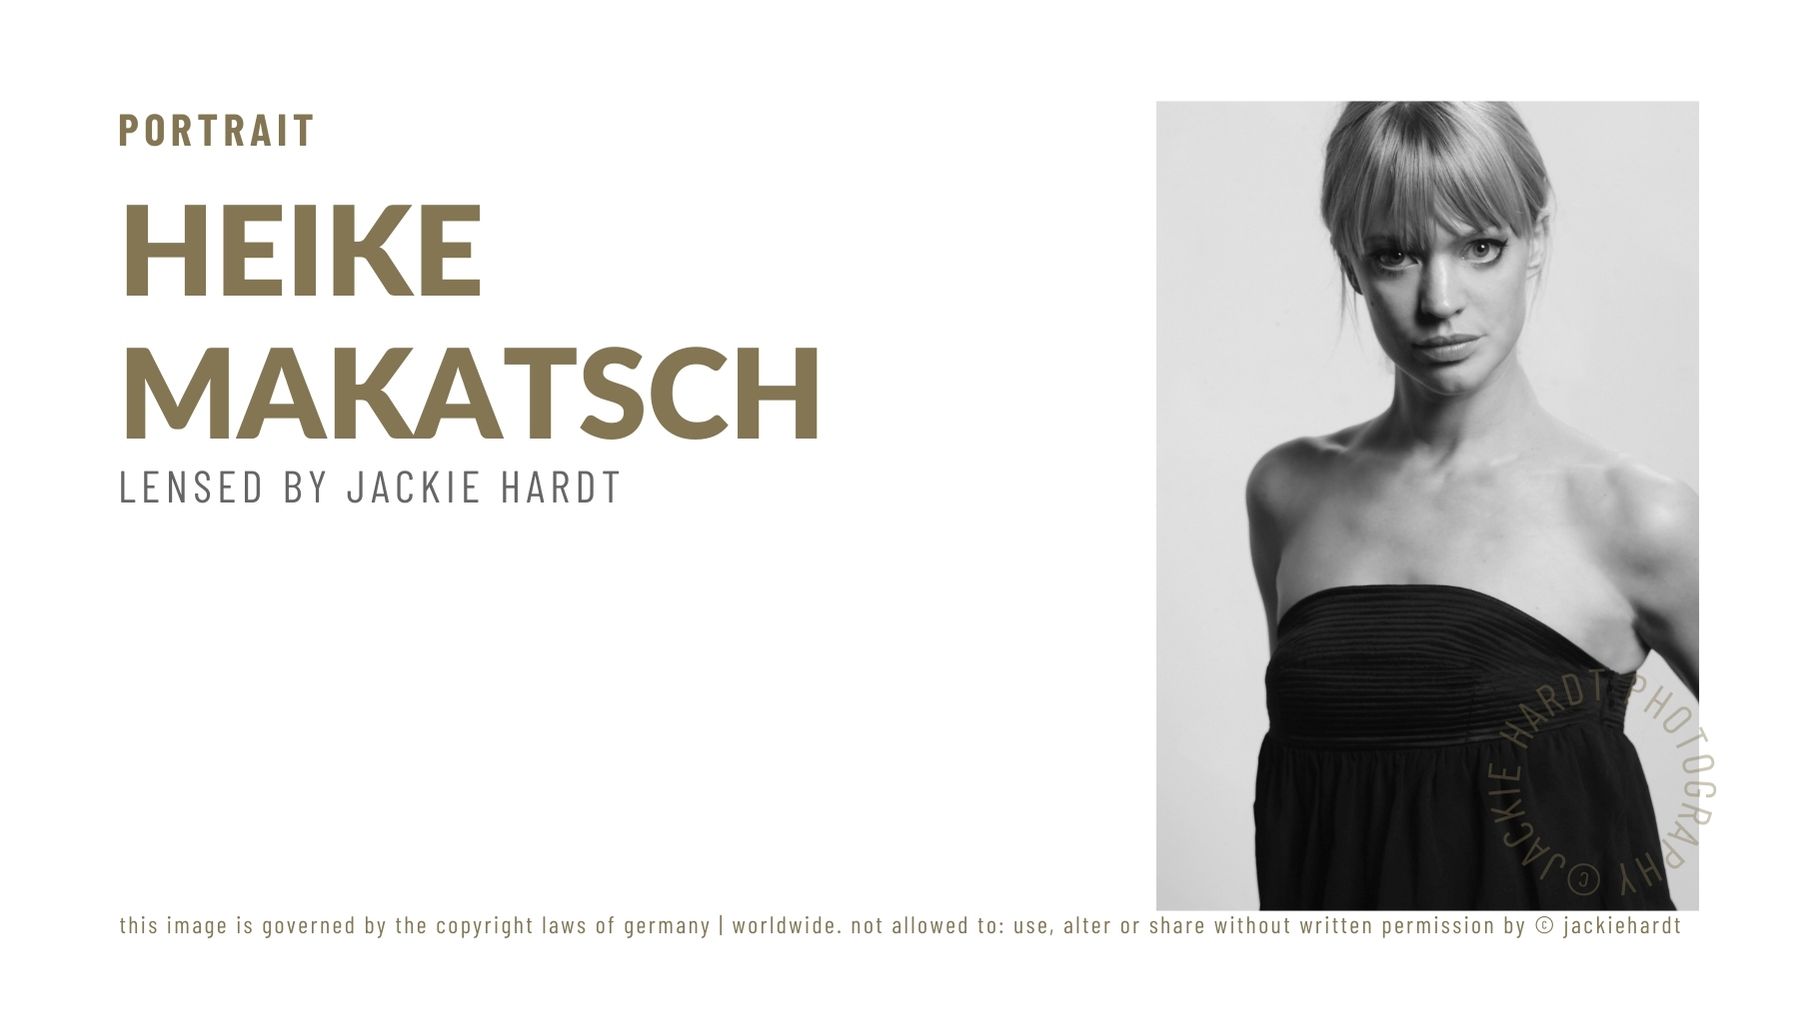 Heike Makatsch, Actress & Artist, Captured by Jackie Hardt